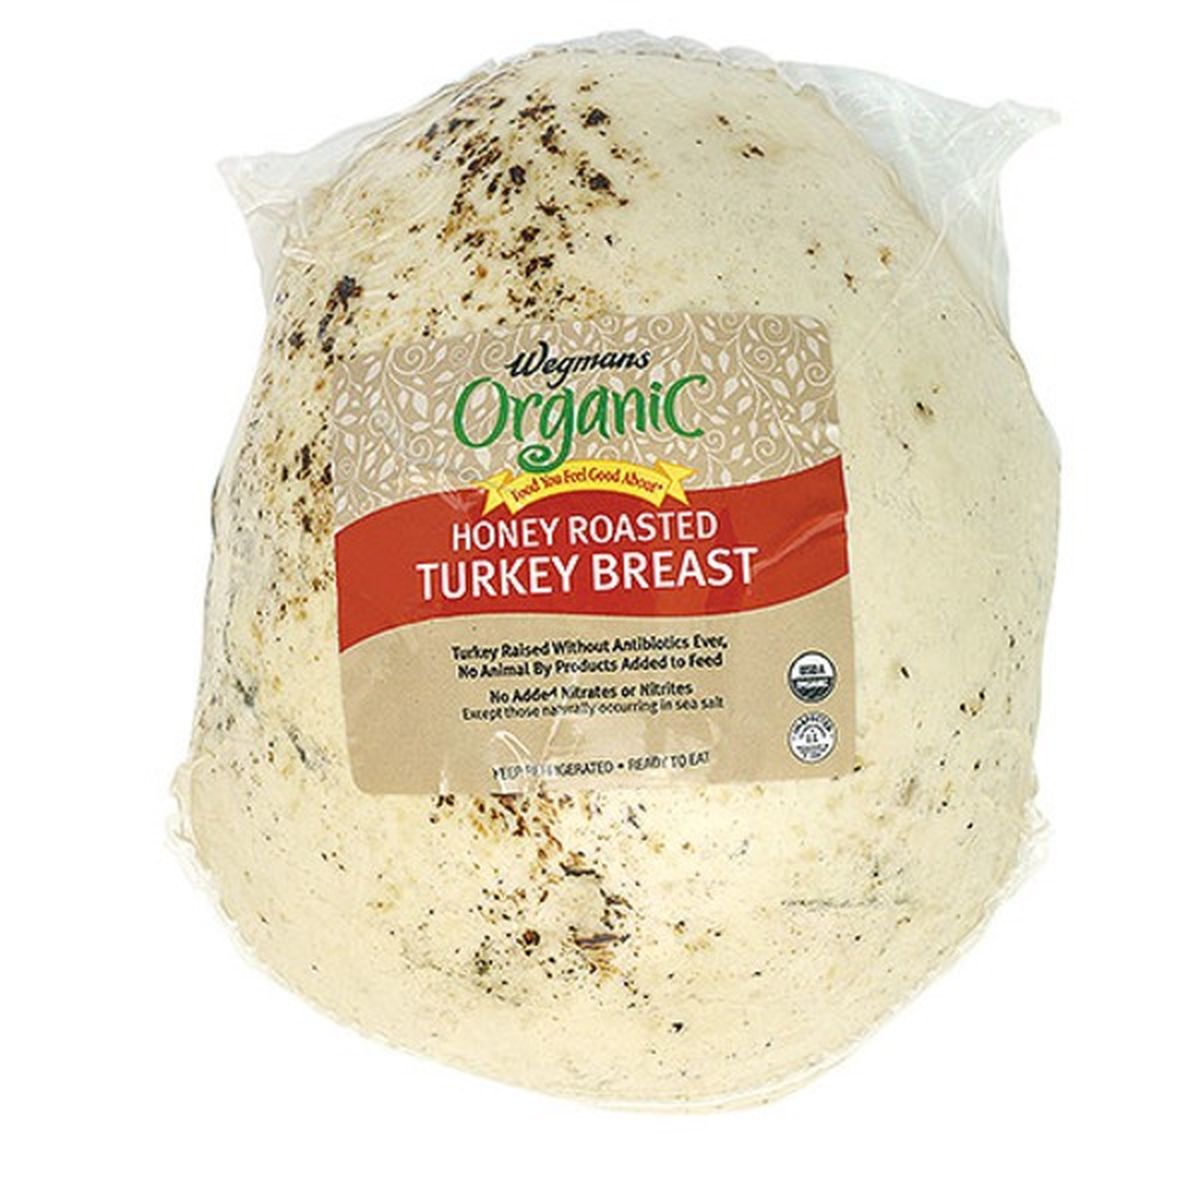 Calories in Wegmans Organic Honey Roasted Turkey Breast